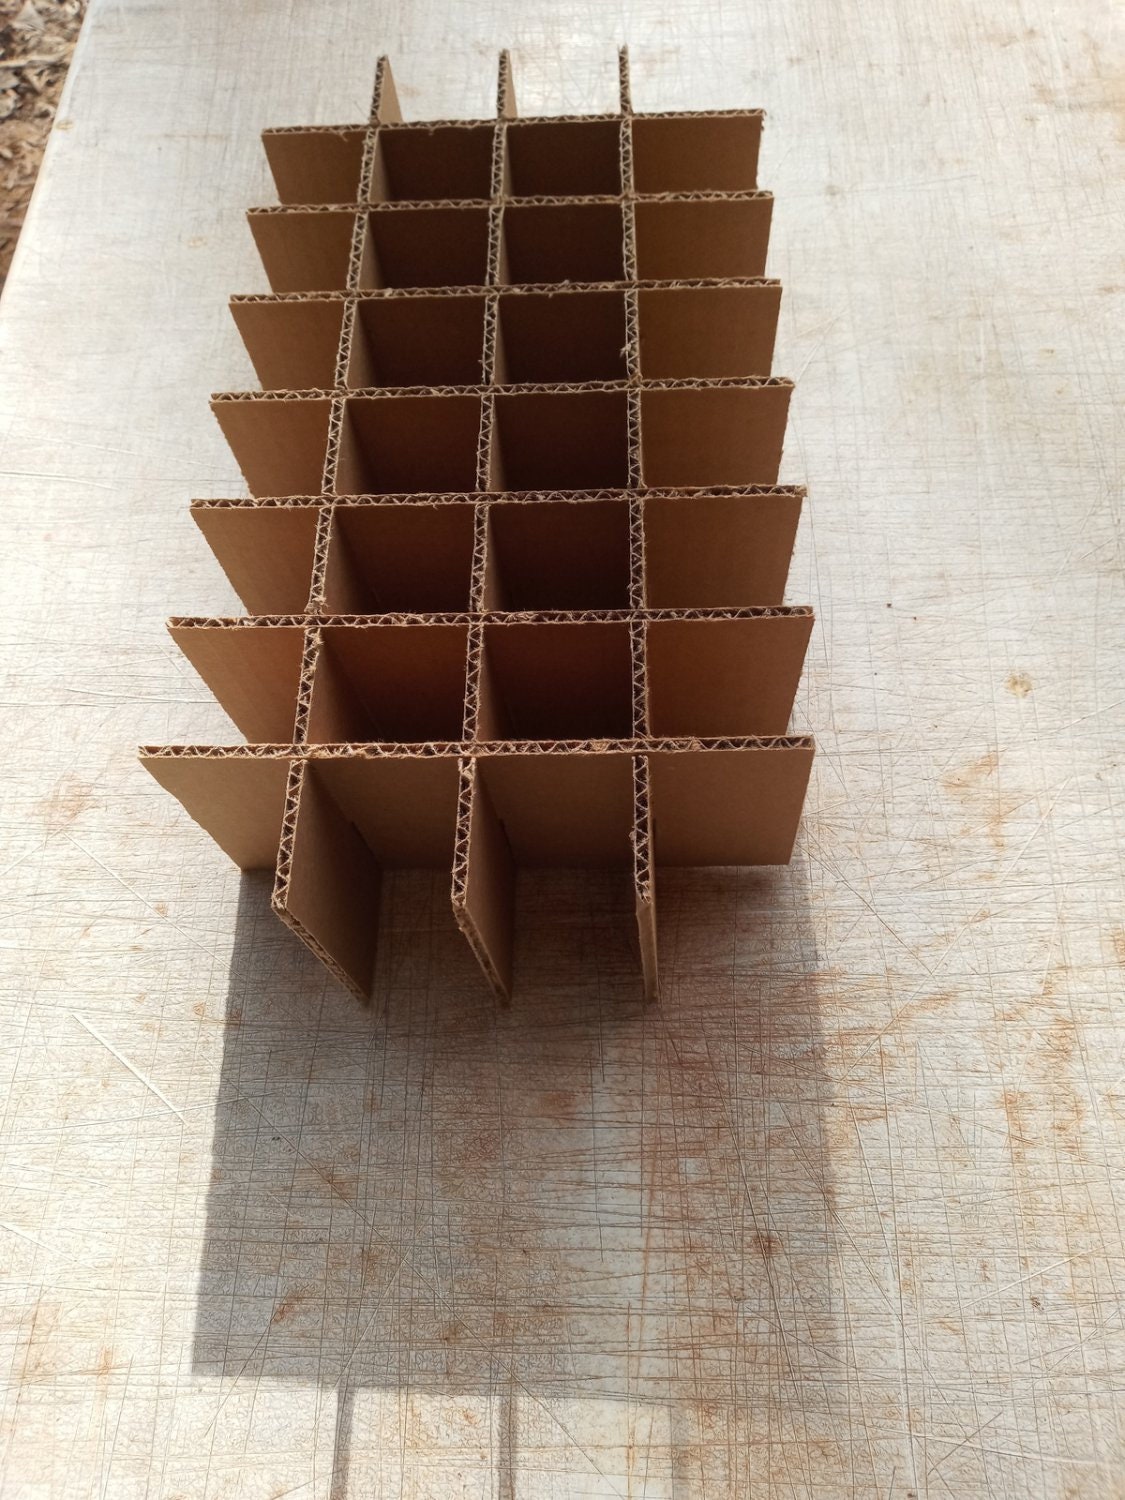 Cardboard Dividers 5 Sets 12 X 9 X 4 High 12 cell B 12-4-03 & B 9-4-02